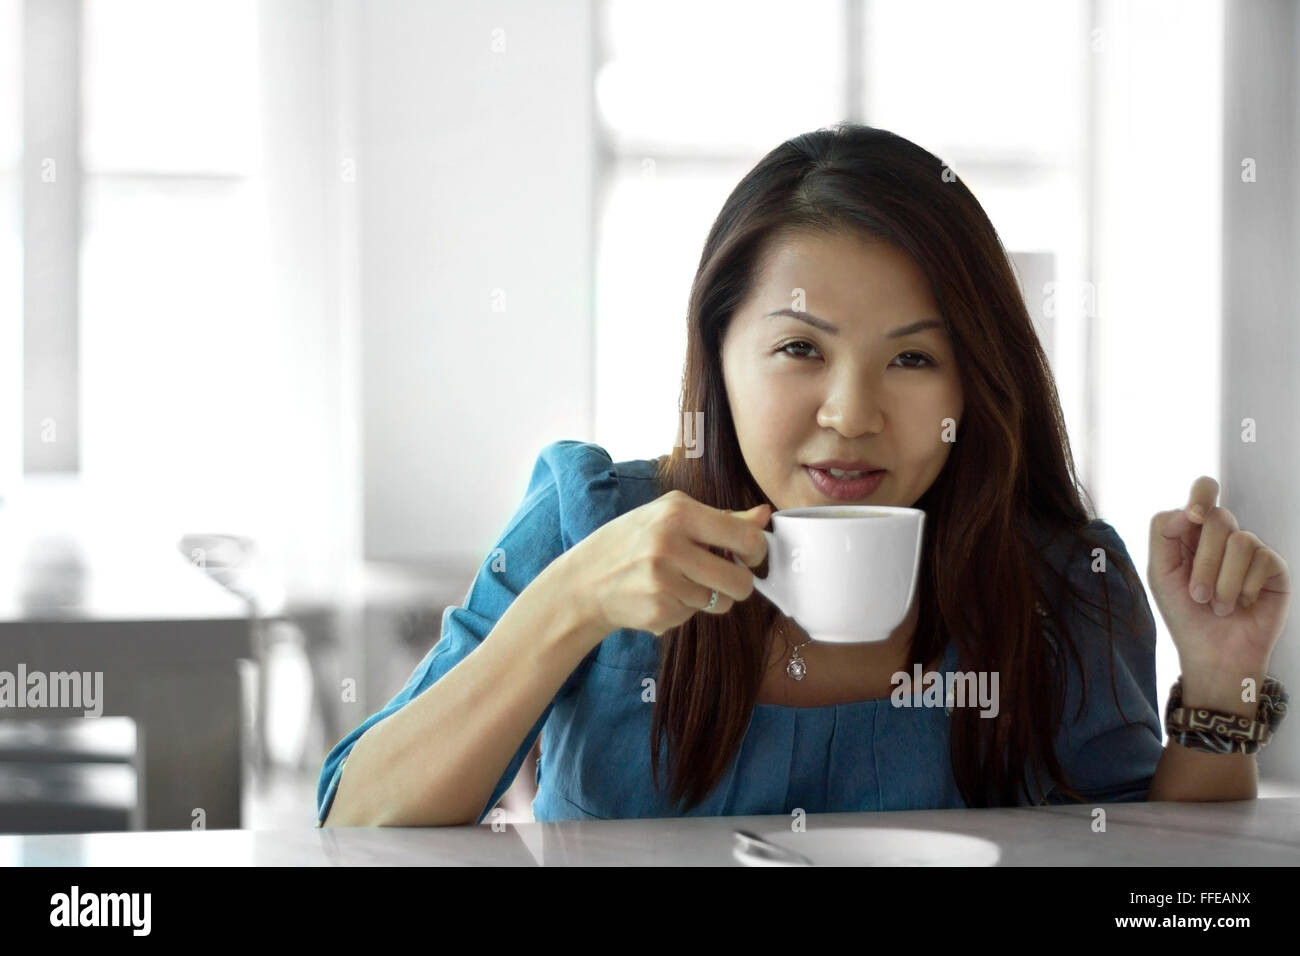 Femmina asiatica belle donne ritratti bere una tazzina di caffè, ragazza cinese relax uno stile di vita in cafe Foto Stock